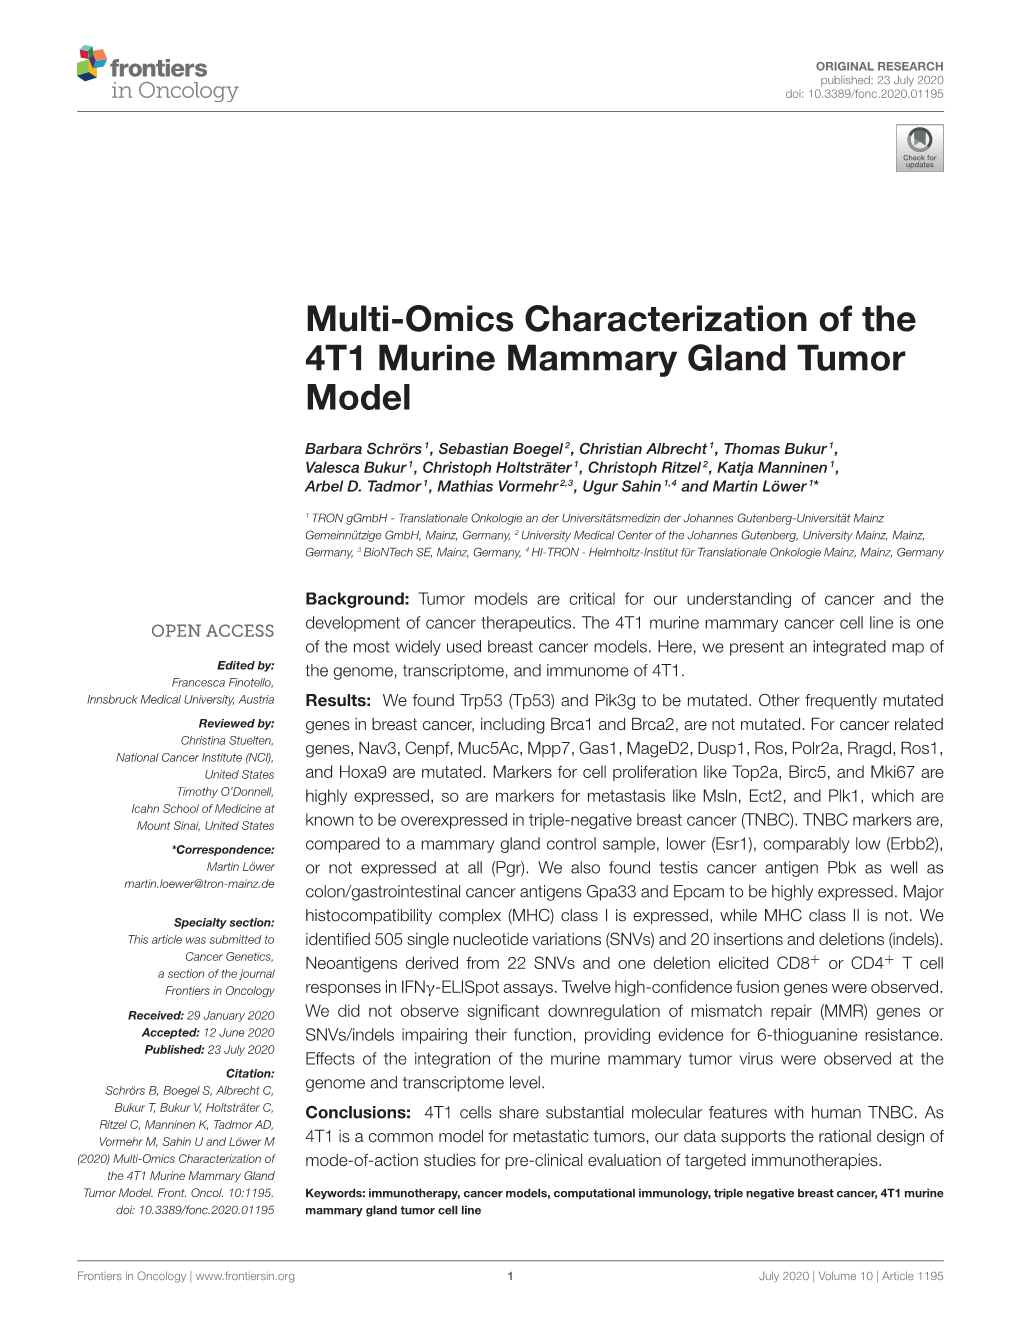 Multi-Omics Characterization of the 4T1 Murine Mammary Gland Tumor Model